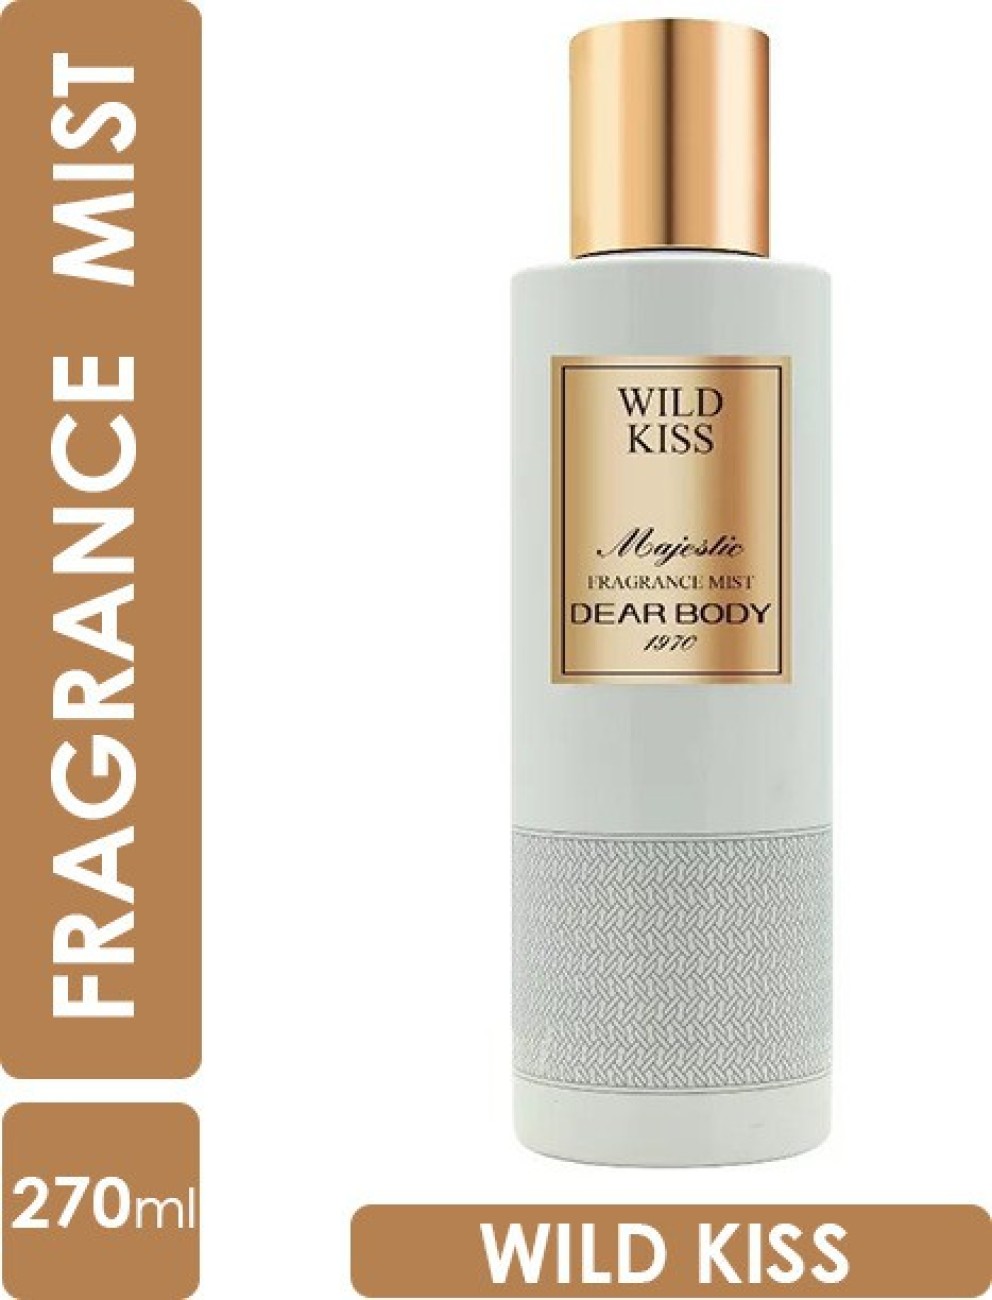 Dear Body Fine Fragrance Mist 270ml - Noir